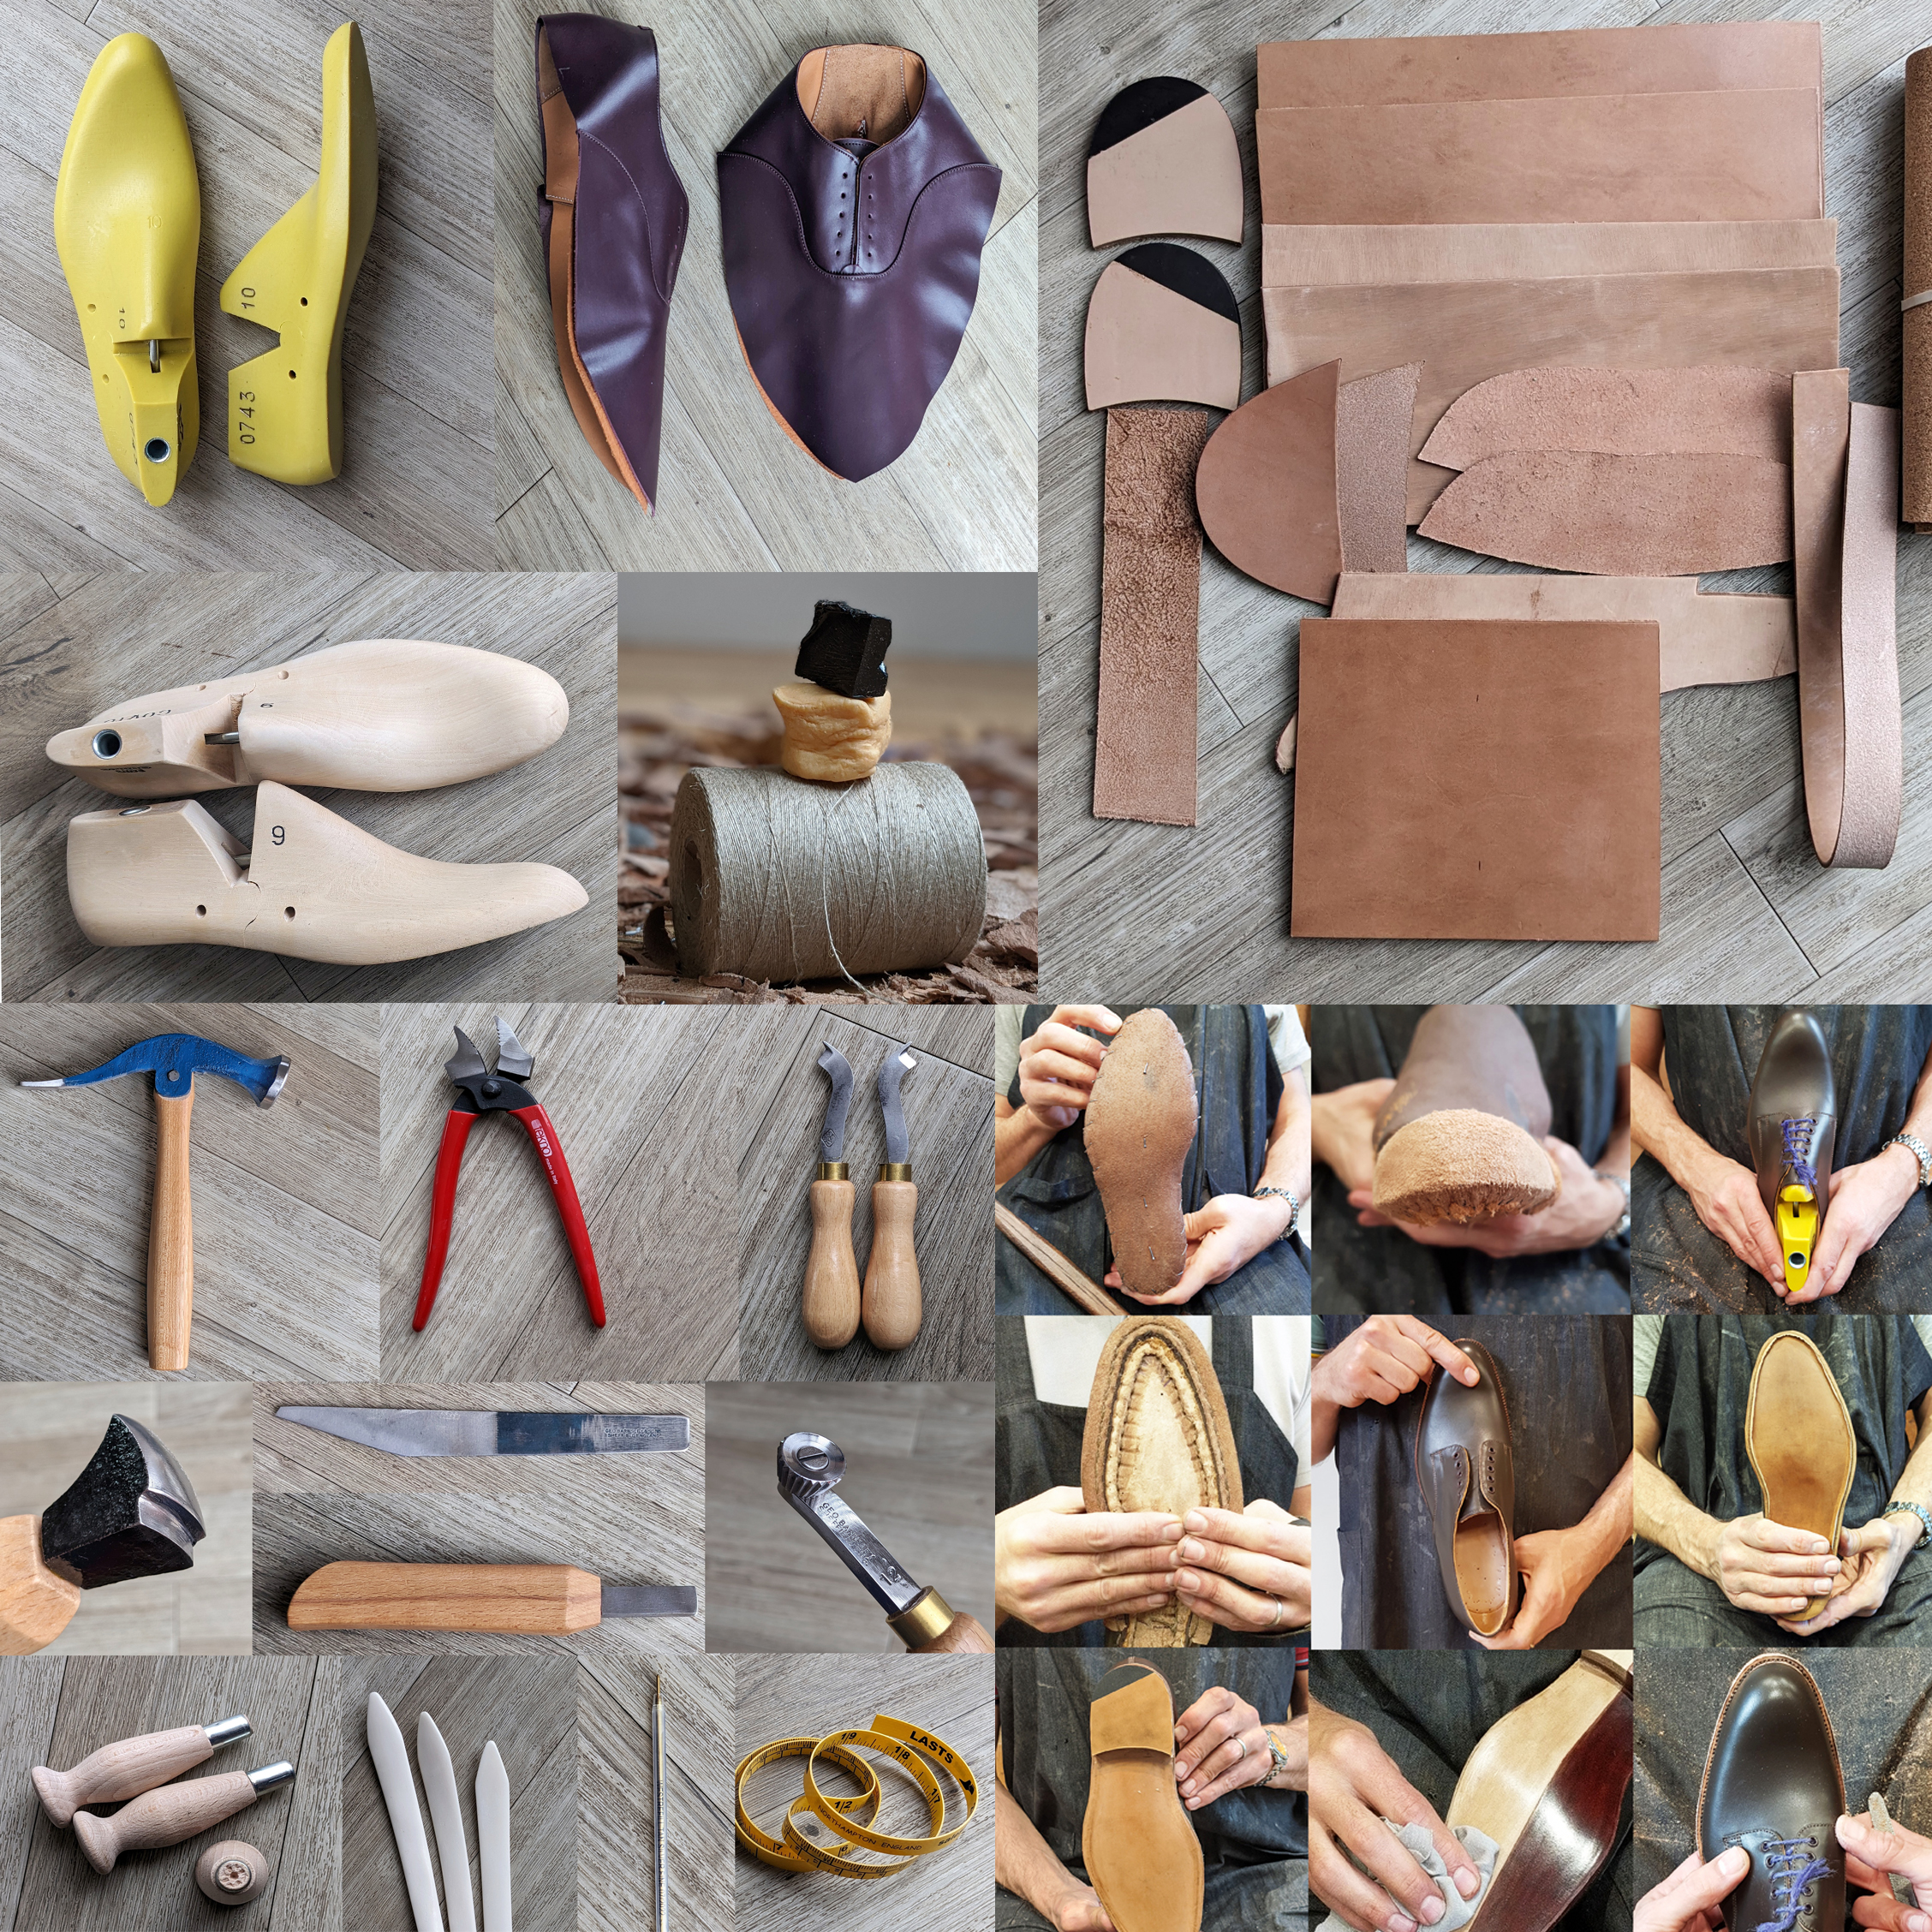 Shoe Making Kit - The Full Monty